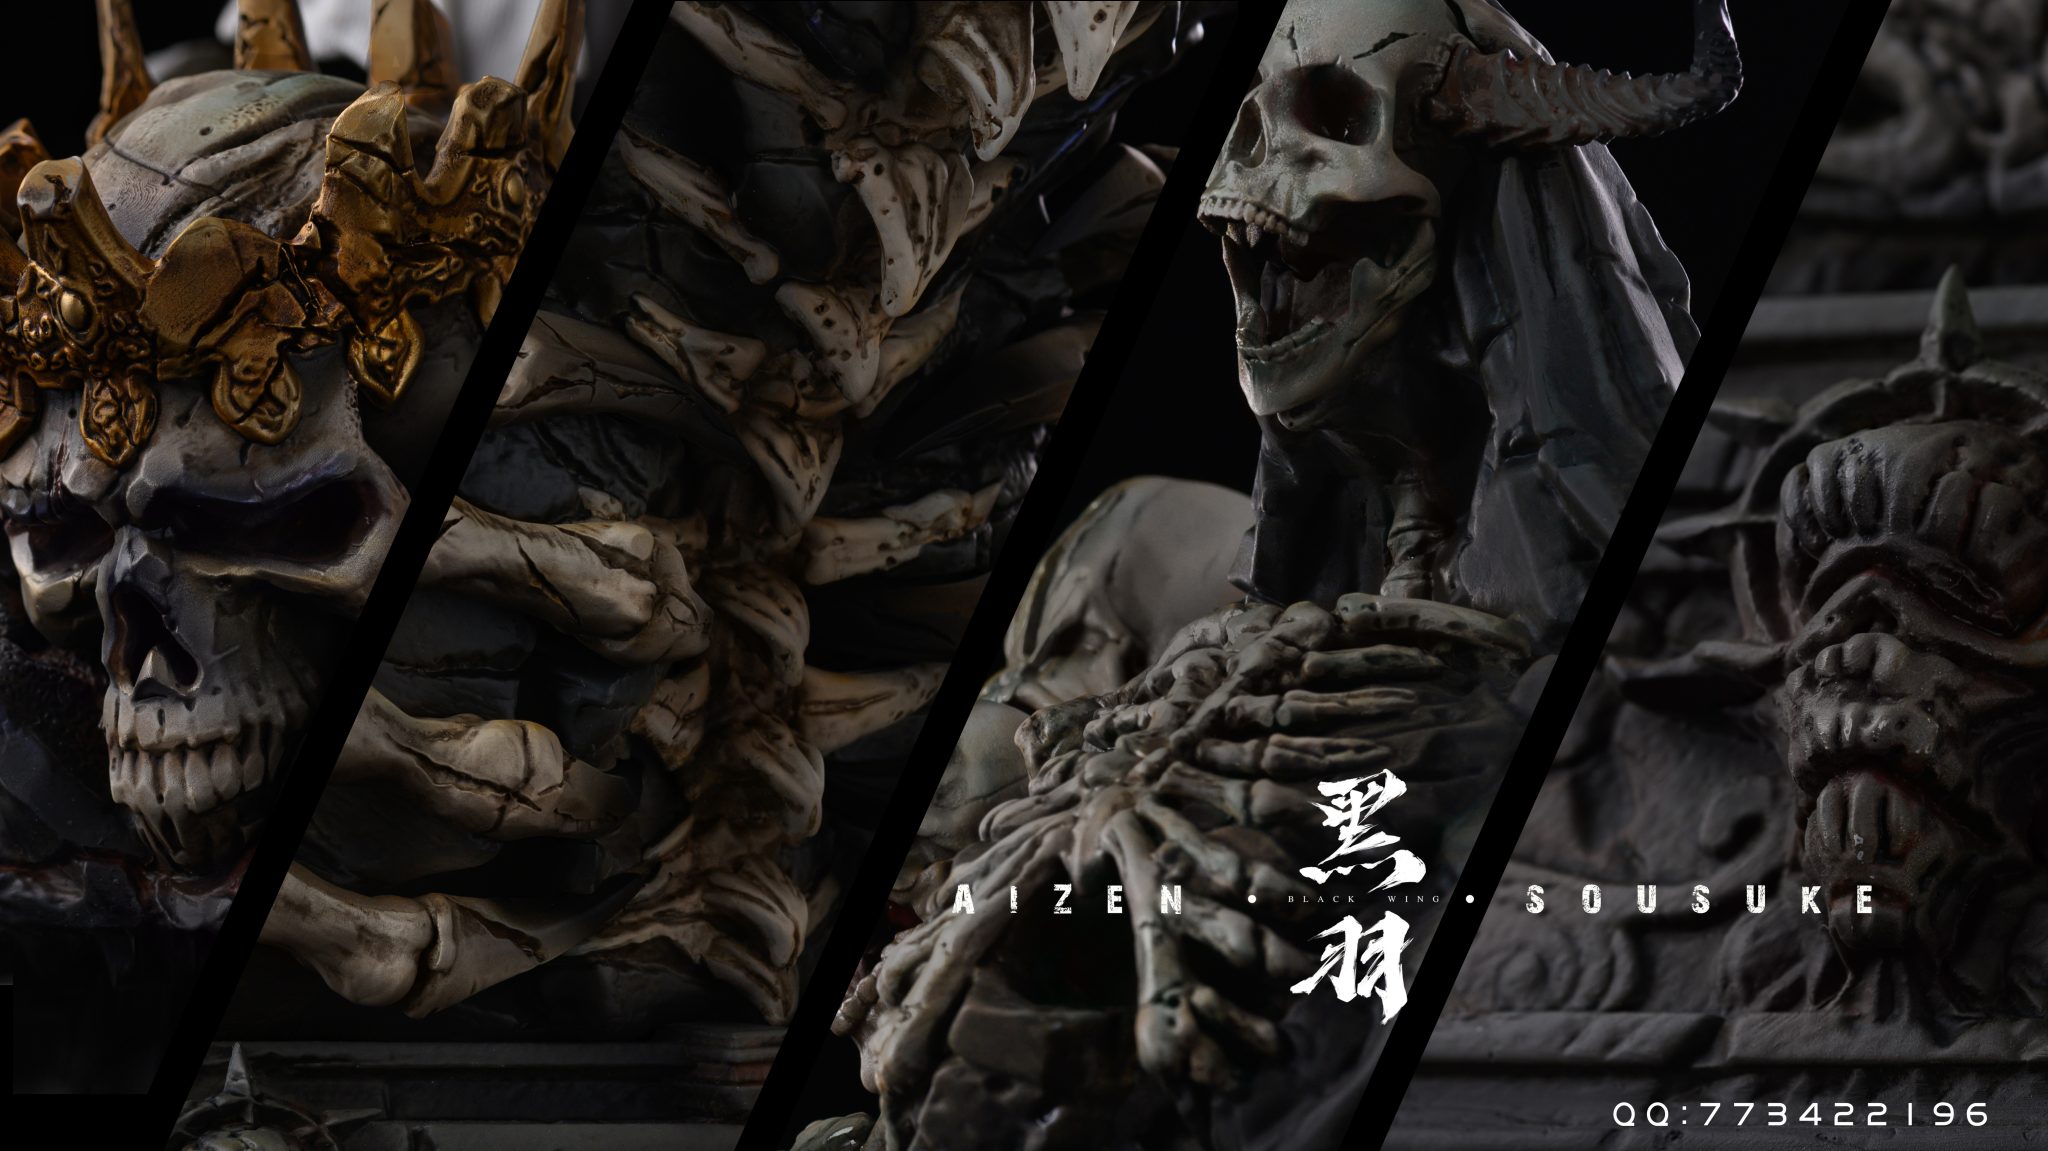 Black Wing Studios Aizen Sosuke - Details